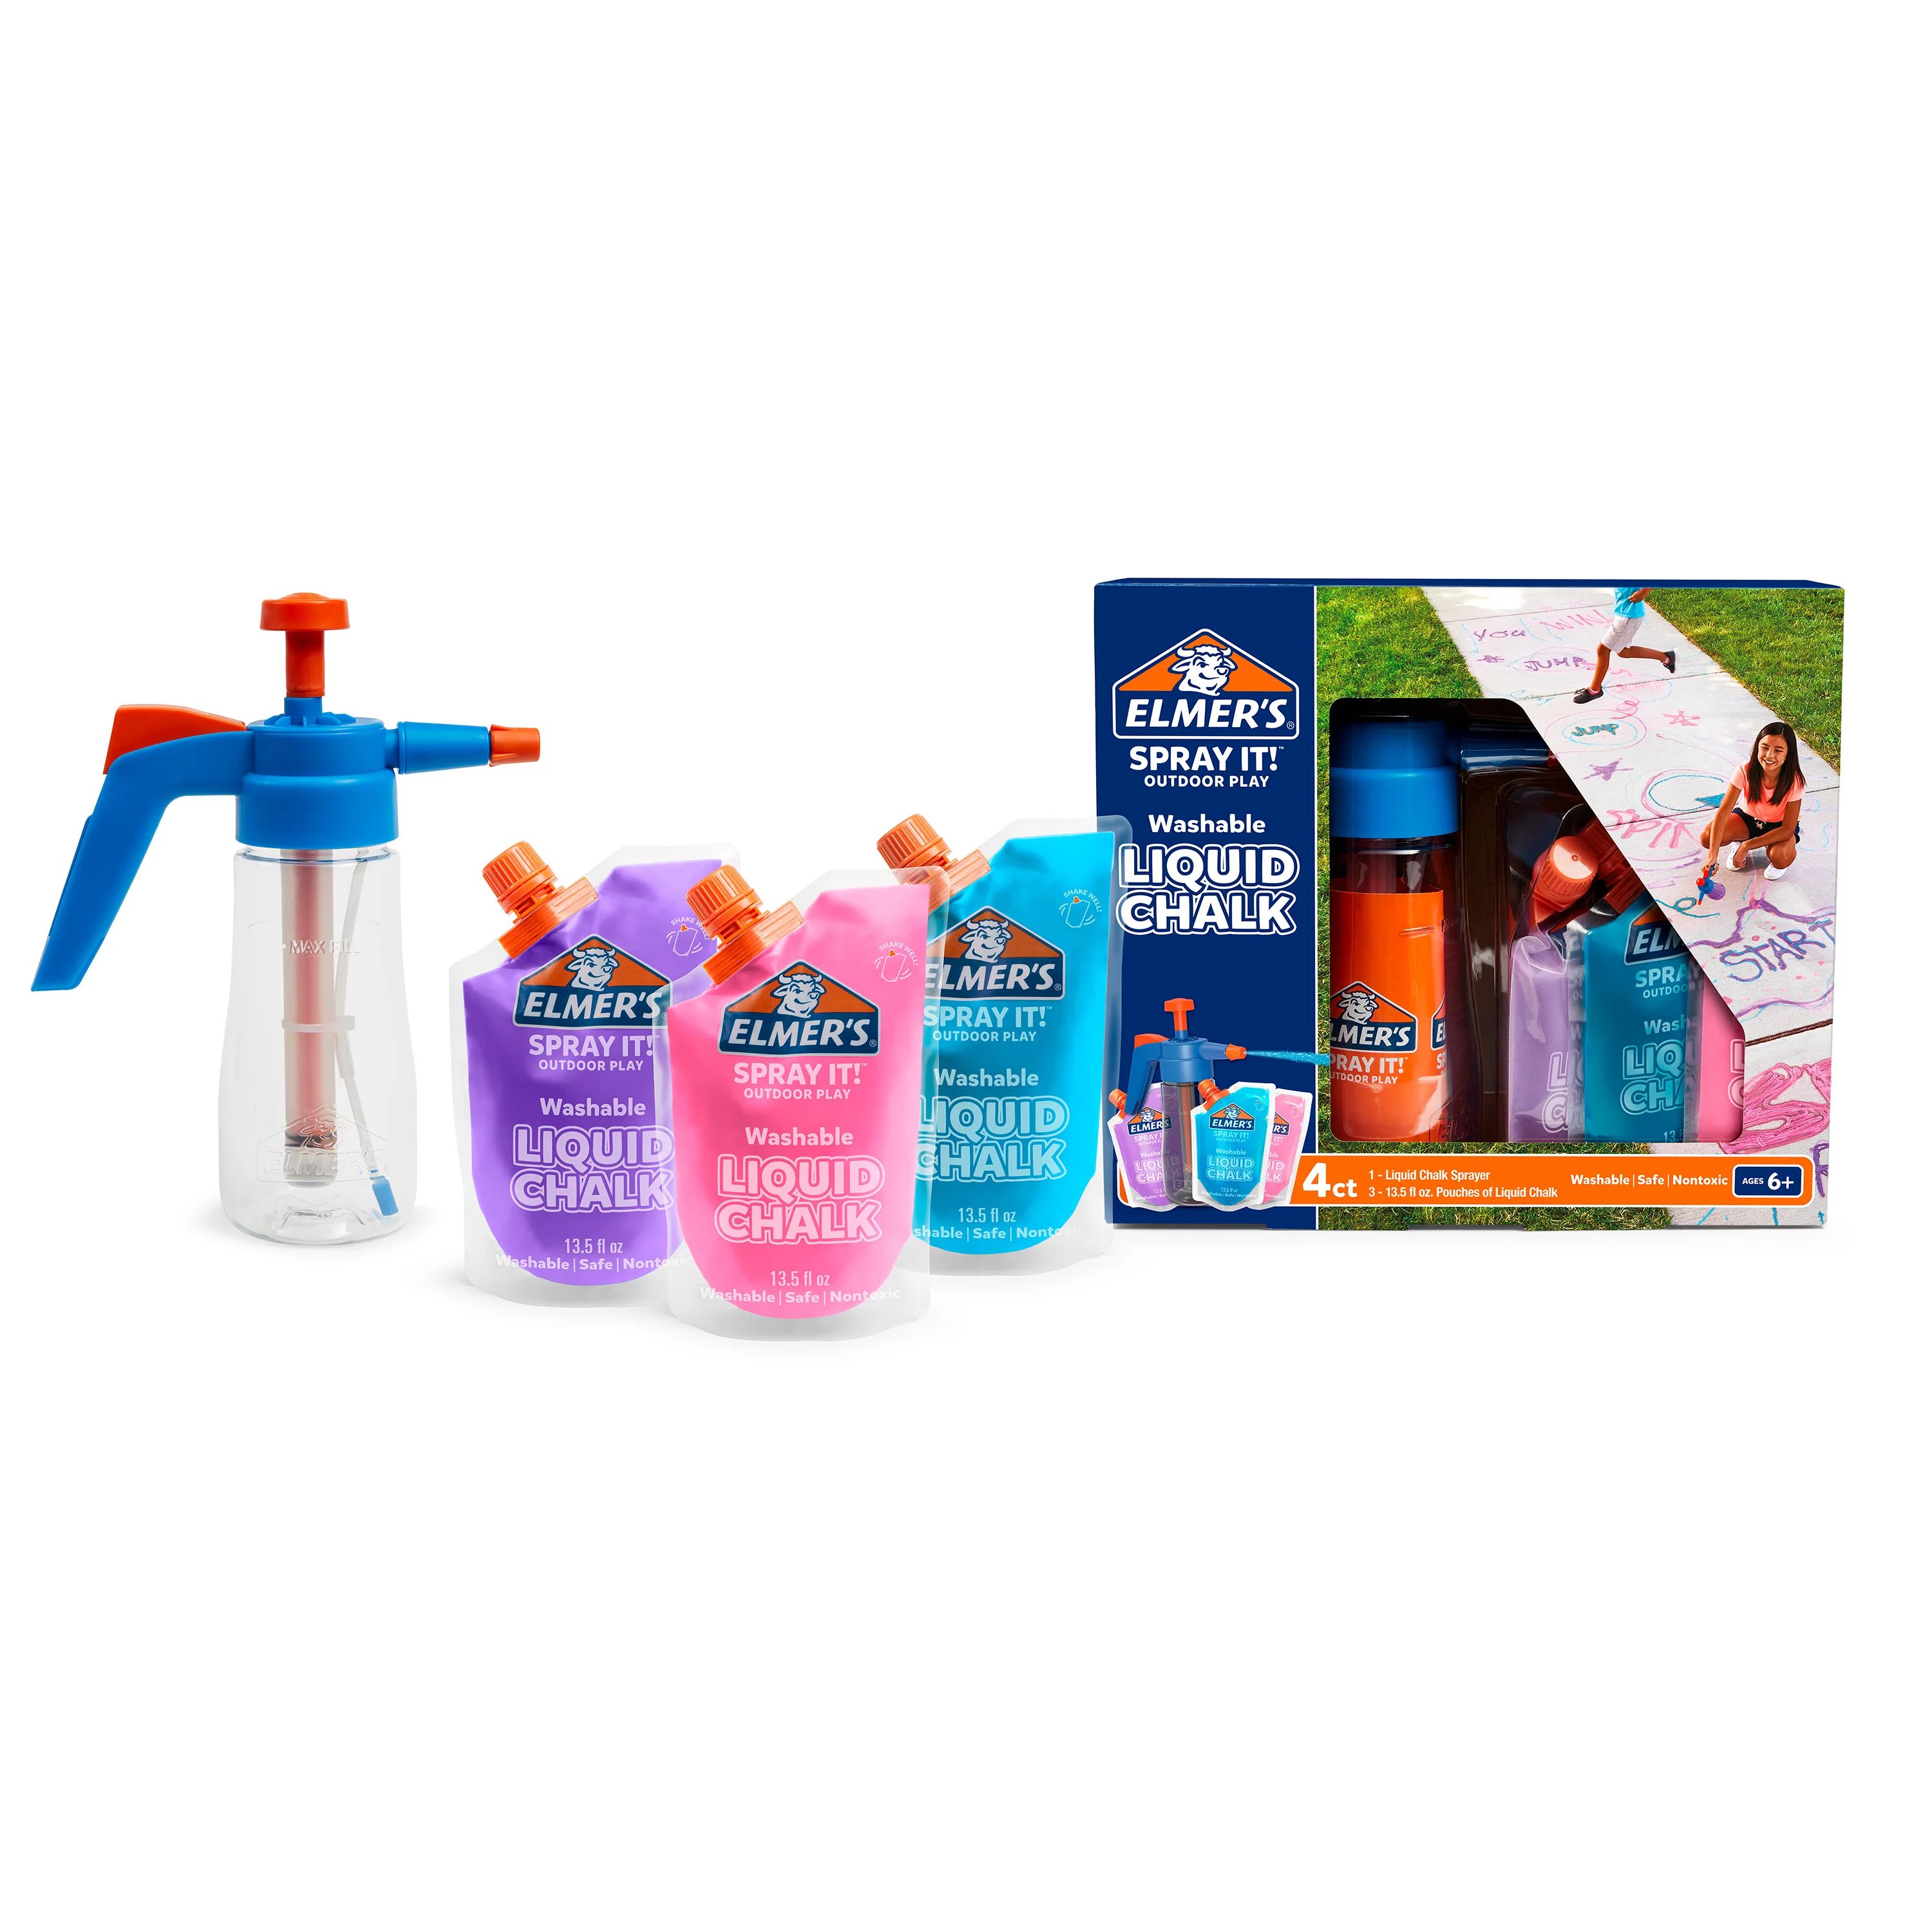 Elmer’s Spray It! Outdoor Play Washable Liquid Chalk Kit, Sprayer and Refills, 4 Count | Walmart (US)